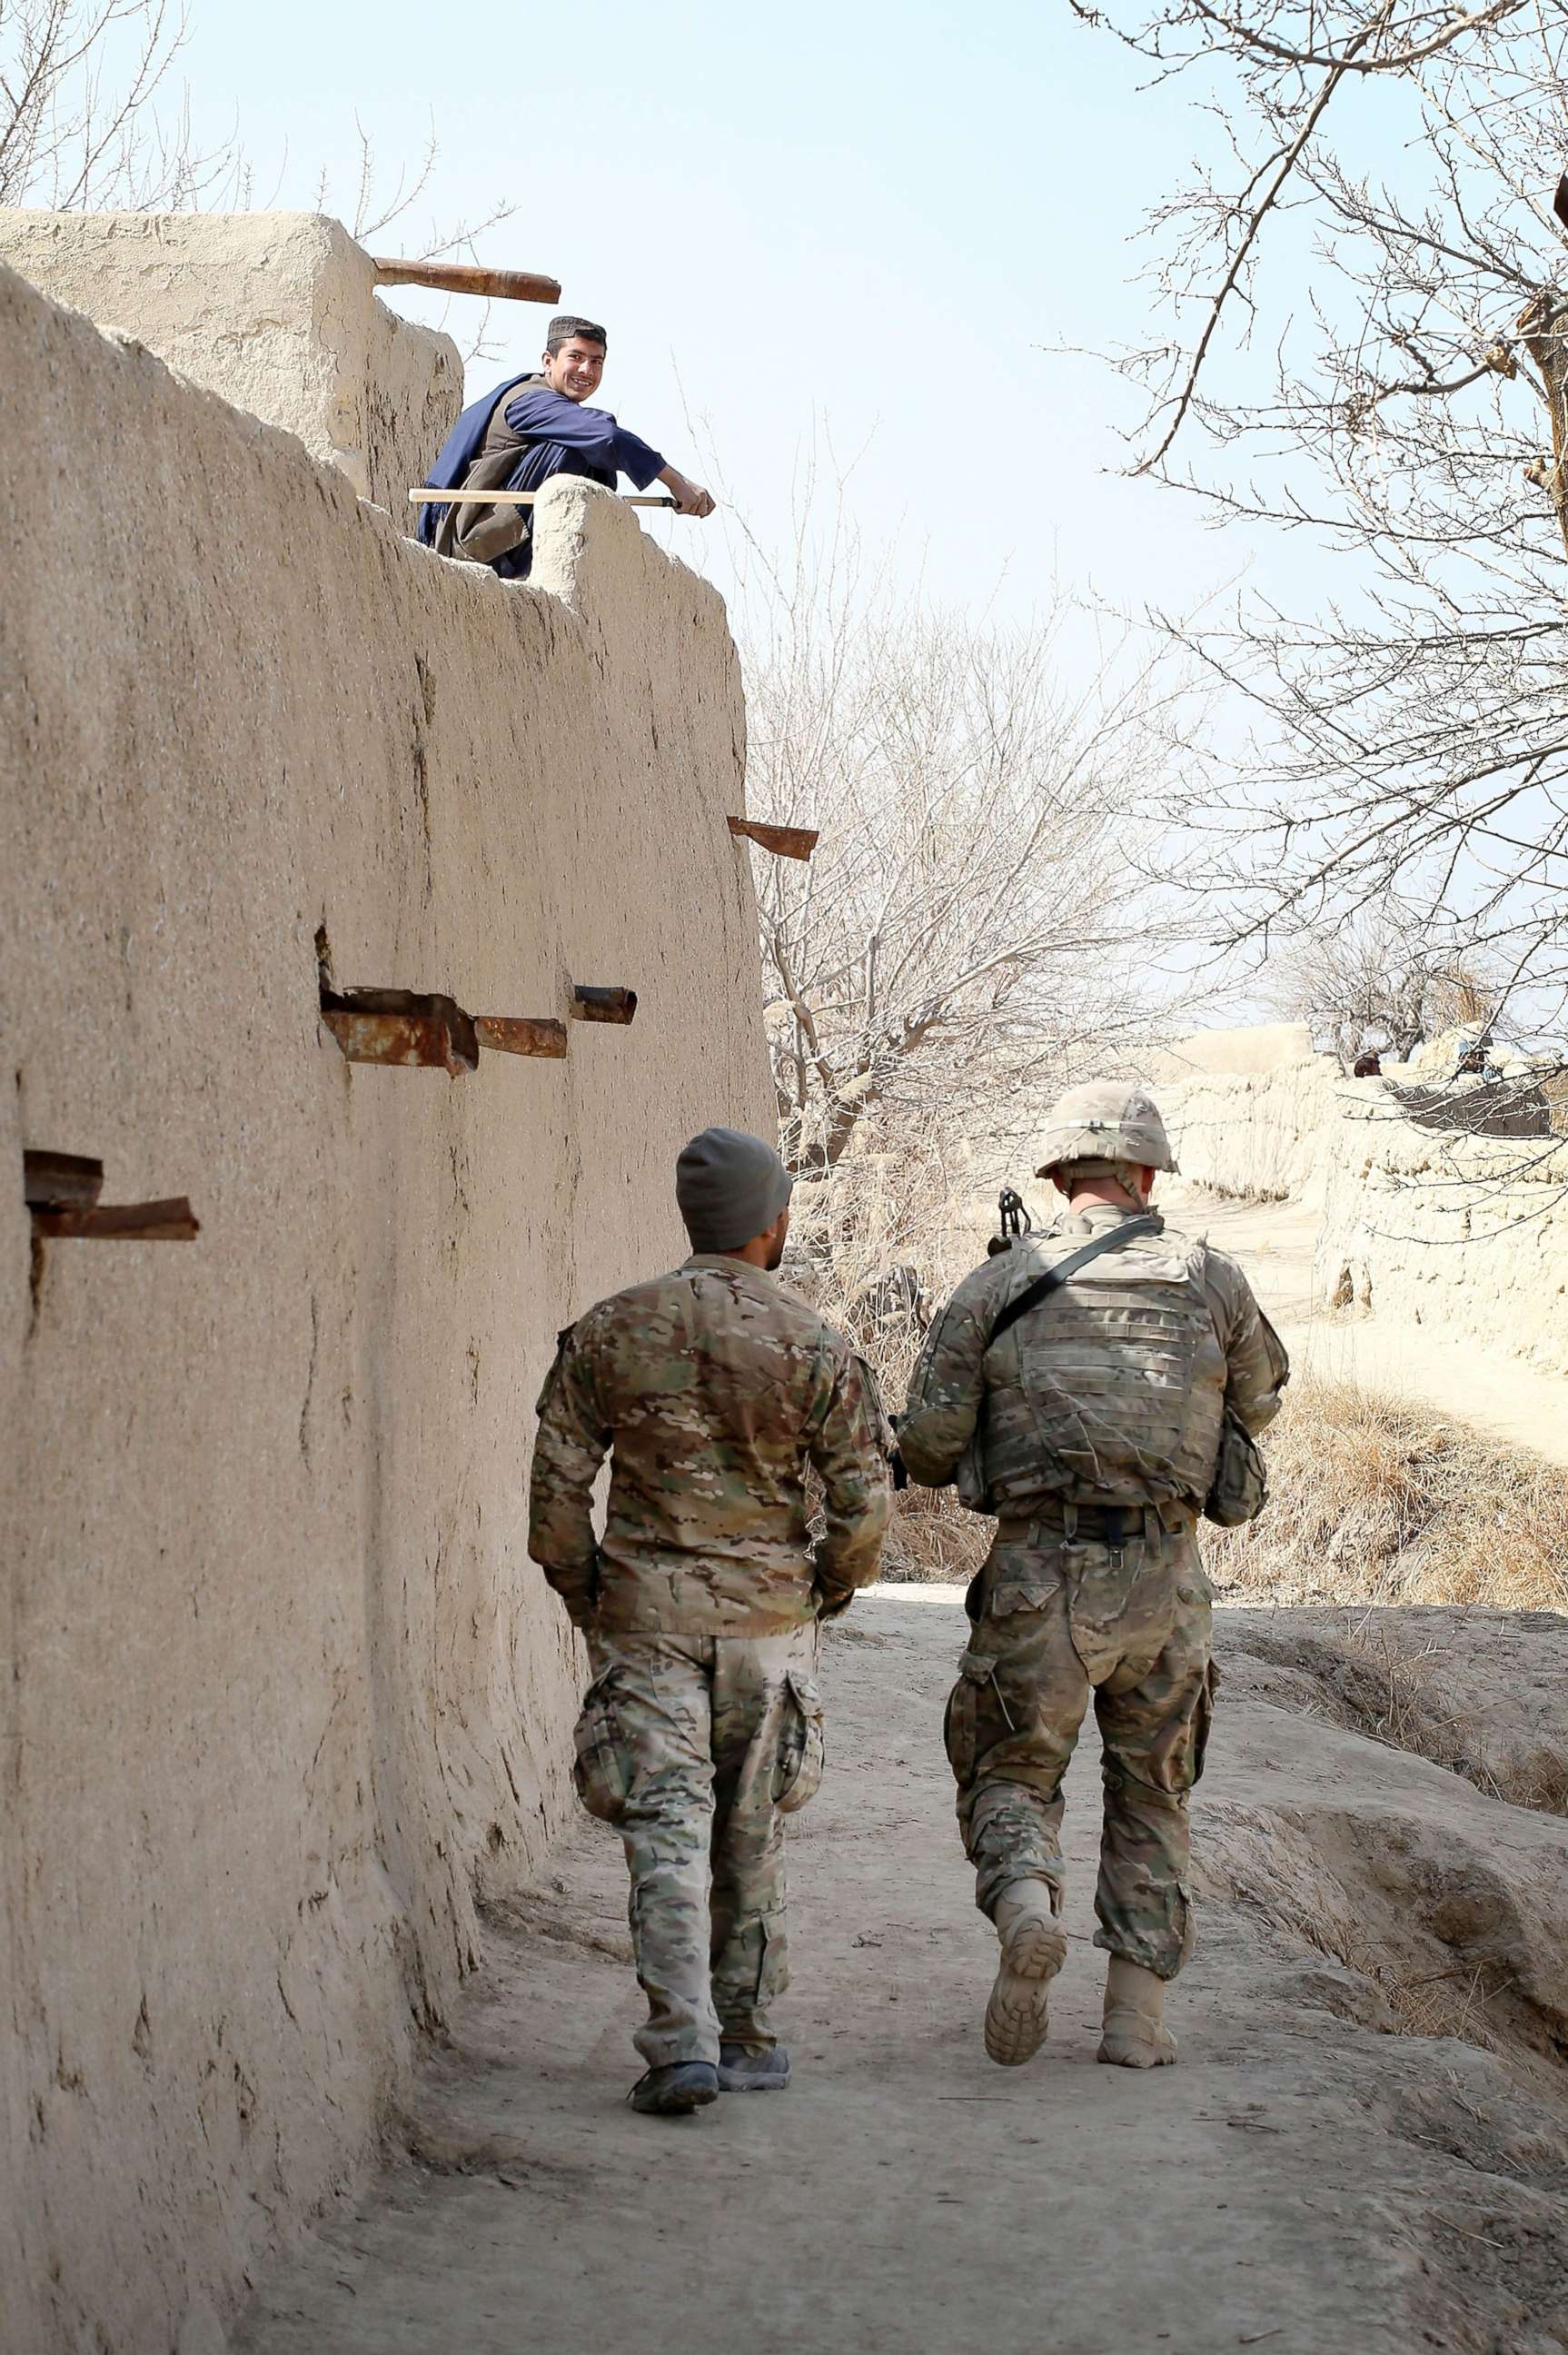 PHOTO: A 1st Lt. and his Afghan interpreter with the U.S. Army's 4th squadron 2d Cavalry Regiment patrol through a village near Kandahar, Afghanistan, Feb. 26, 2021.